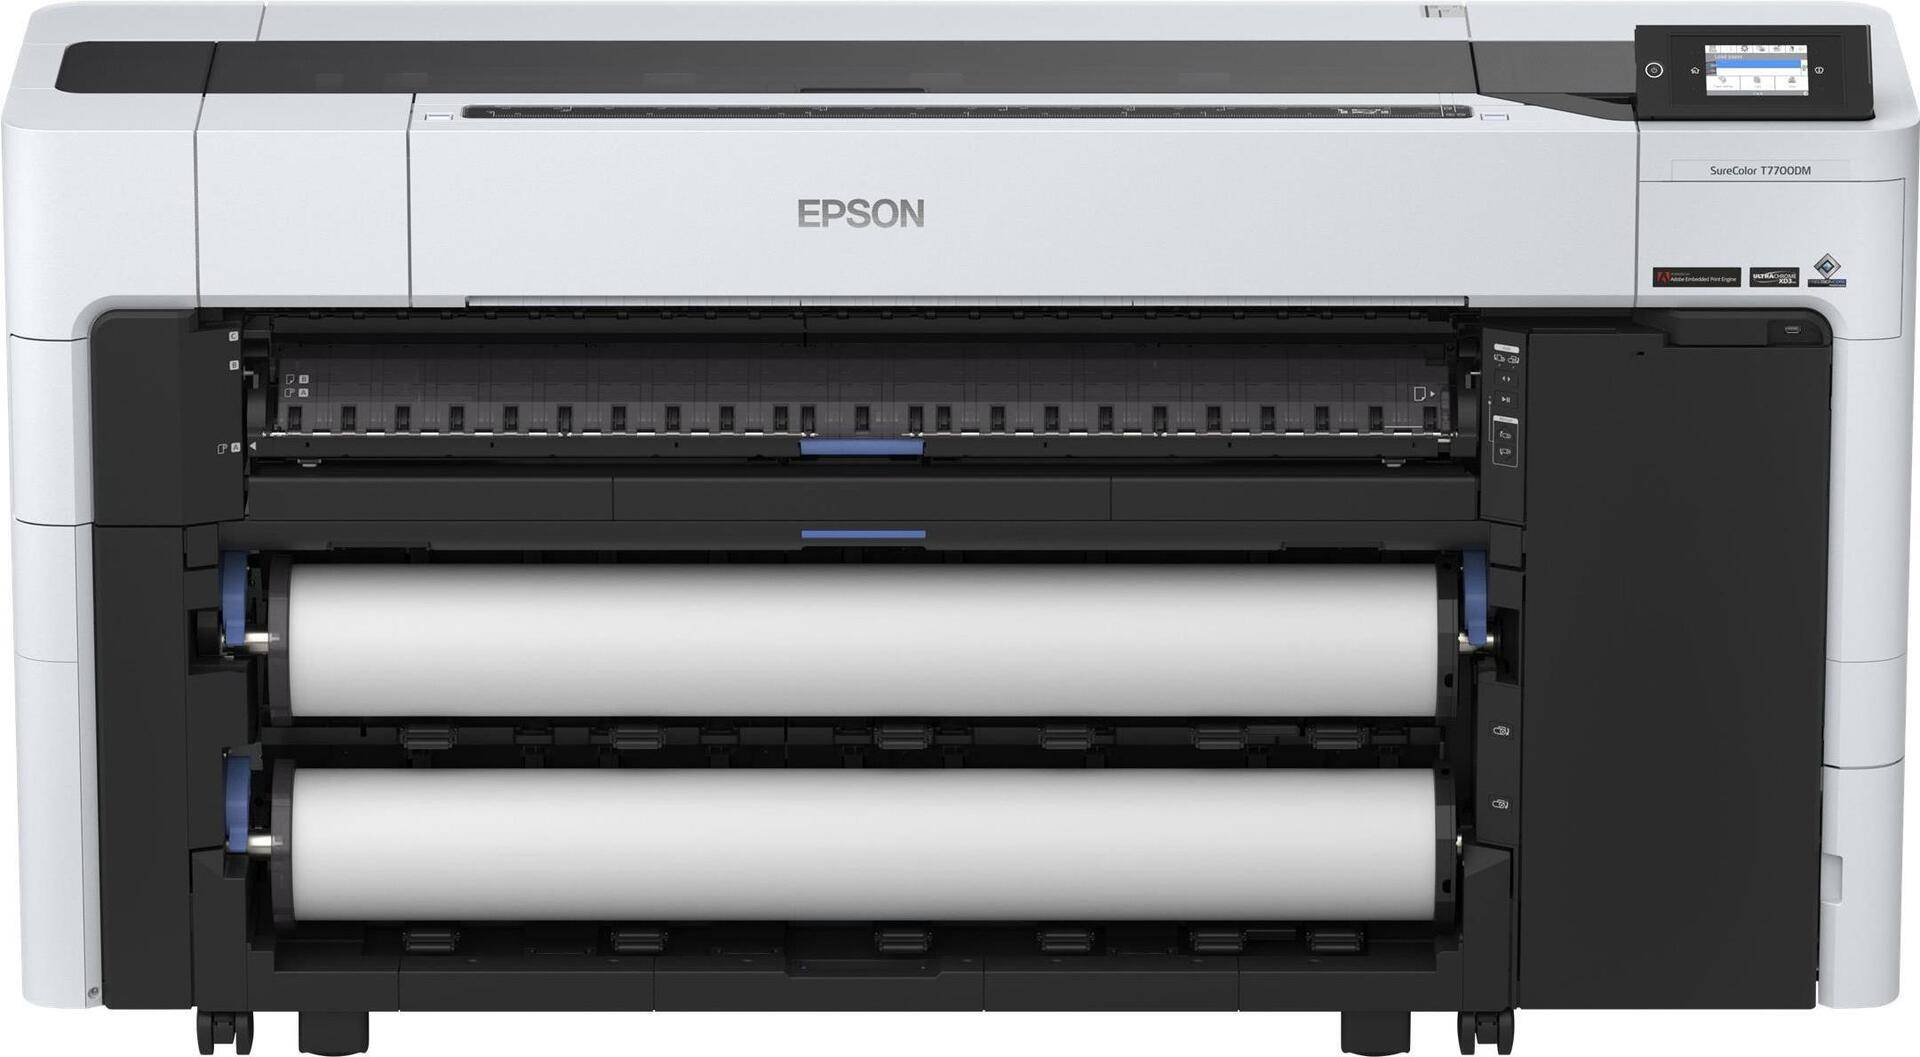 Epson SureColor T7700DM - 1118 mm (44) Multifunktionsdrucker - Farbe - Tintenstrahl - Rolle (111,8 cm) (Medien) - USB 2.0, Gigabit LAN, NFC, Wi-Fi(ac) von Epson